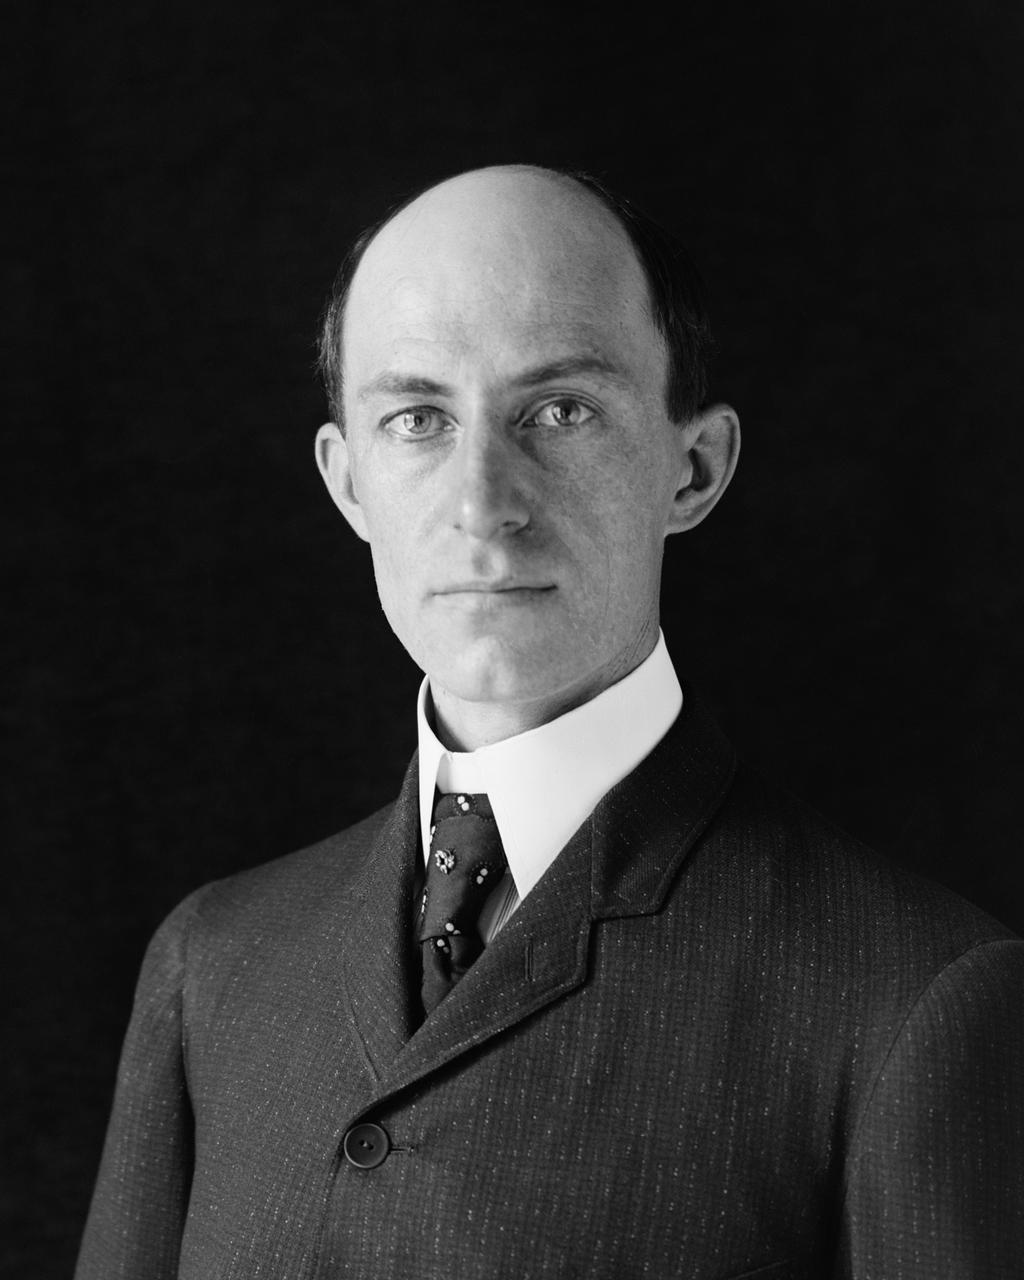 Wright (1871 1948) Wilbur